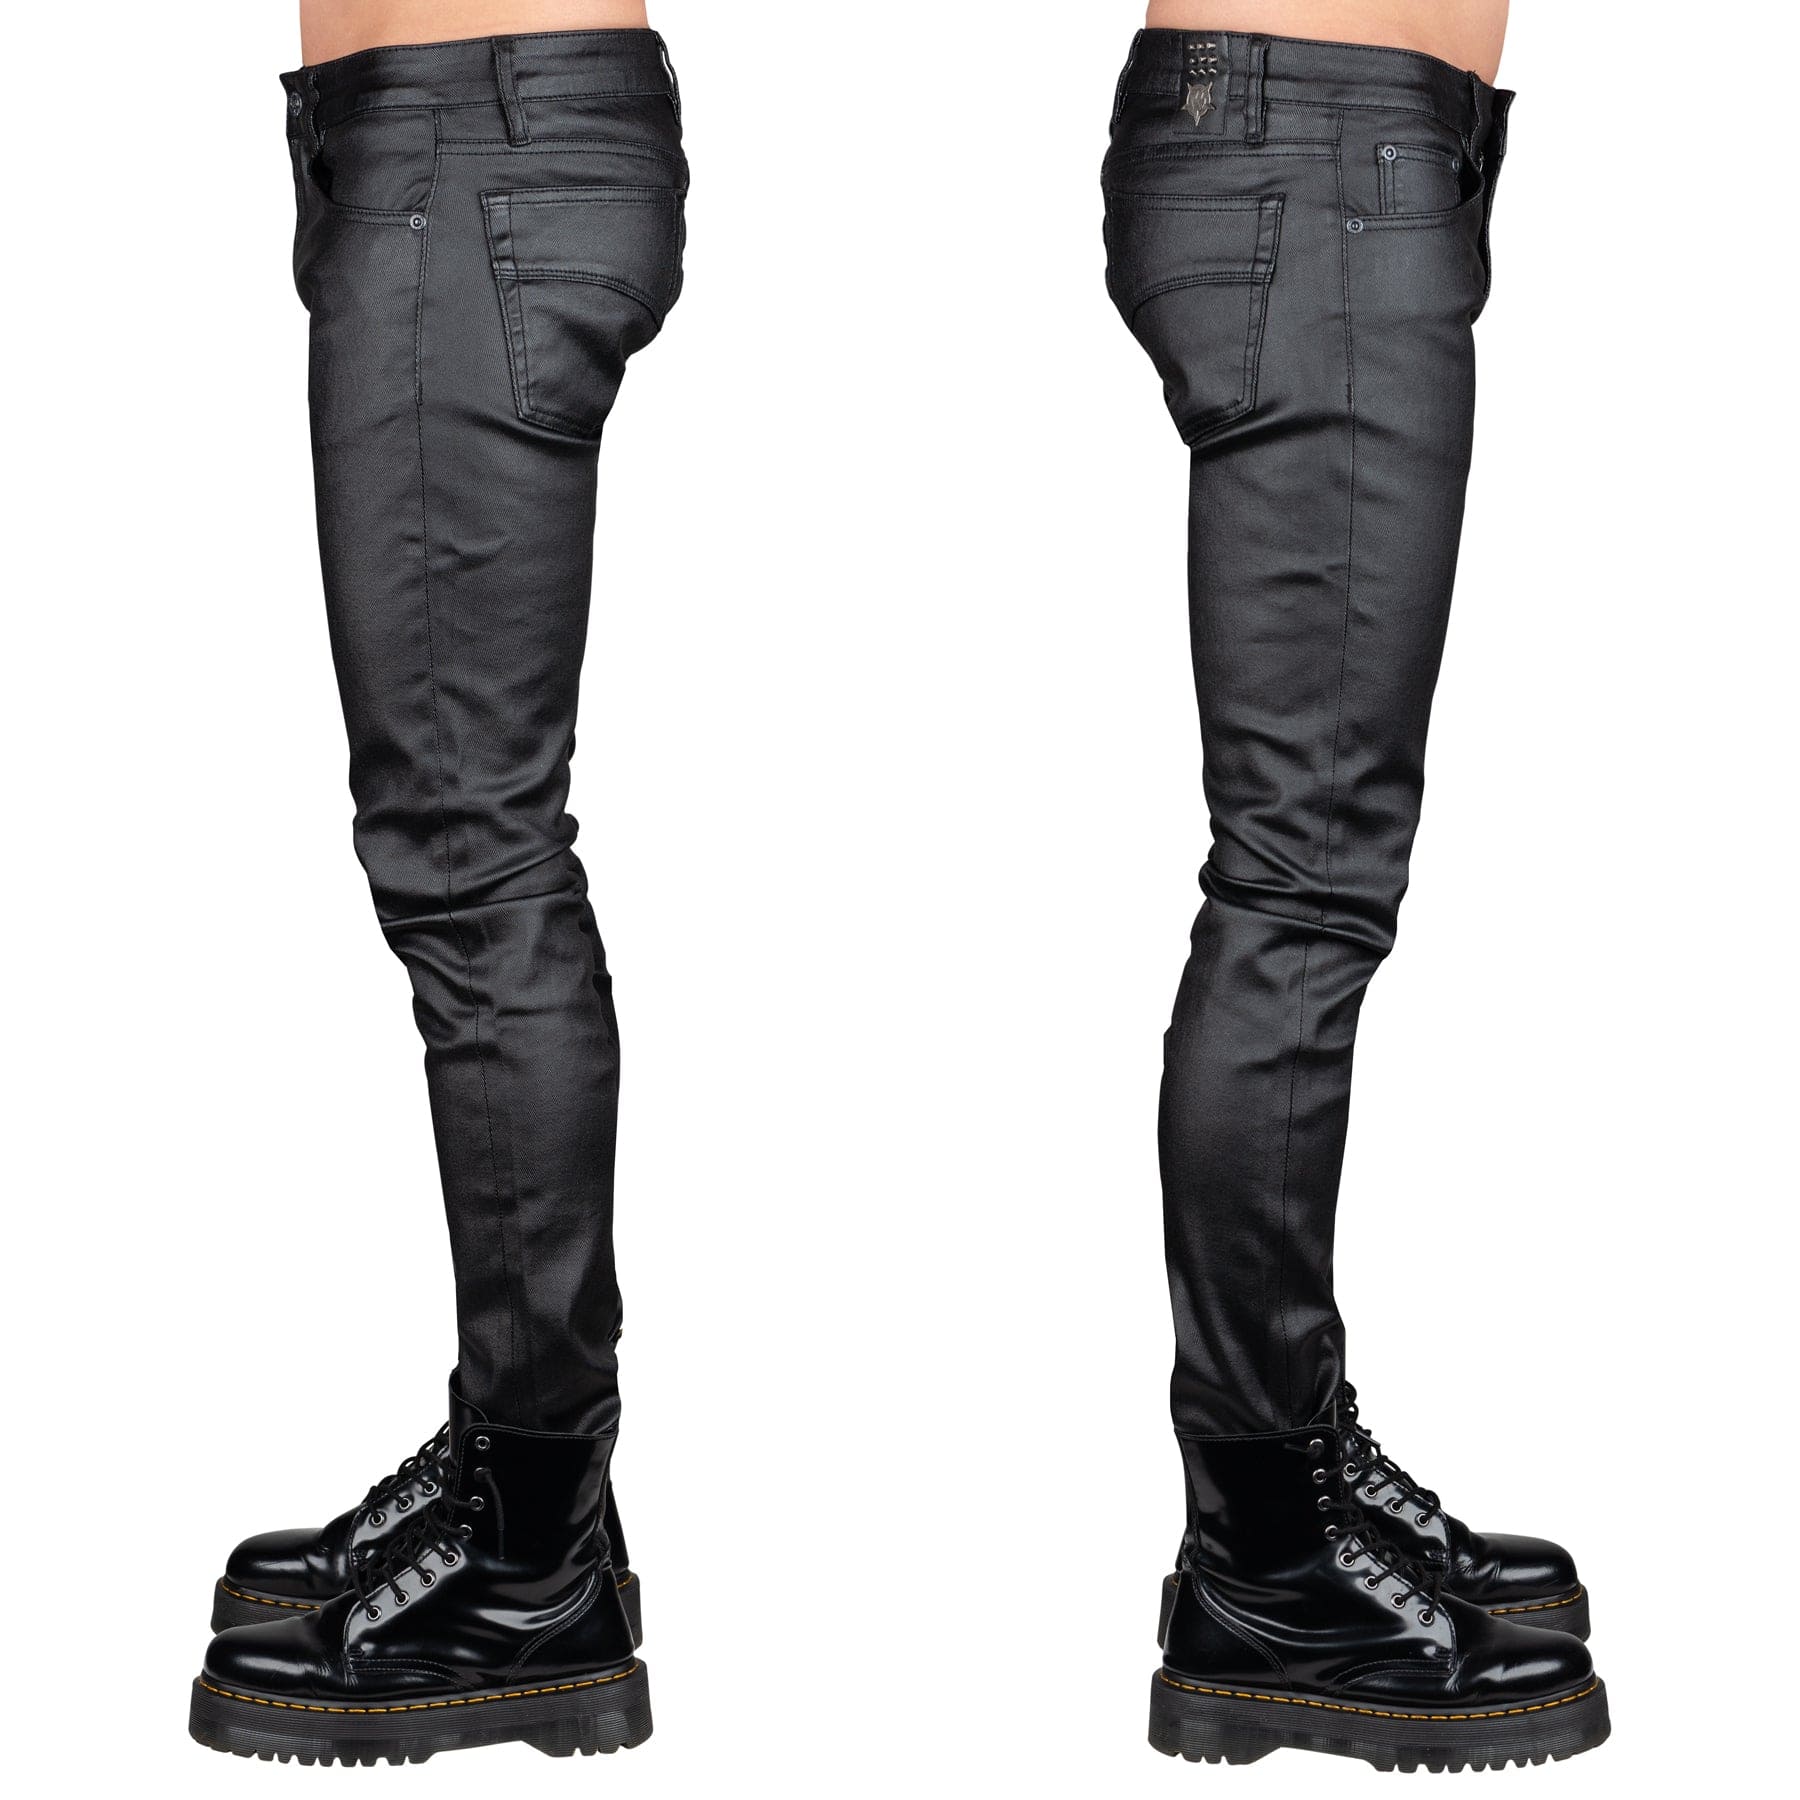 Wornstar Clothing Mens Jeans. Rampager Waxed Denim Jeans - Black